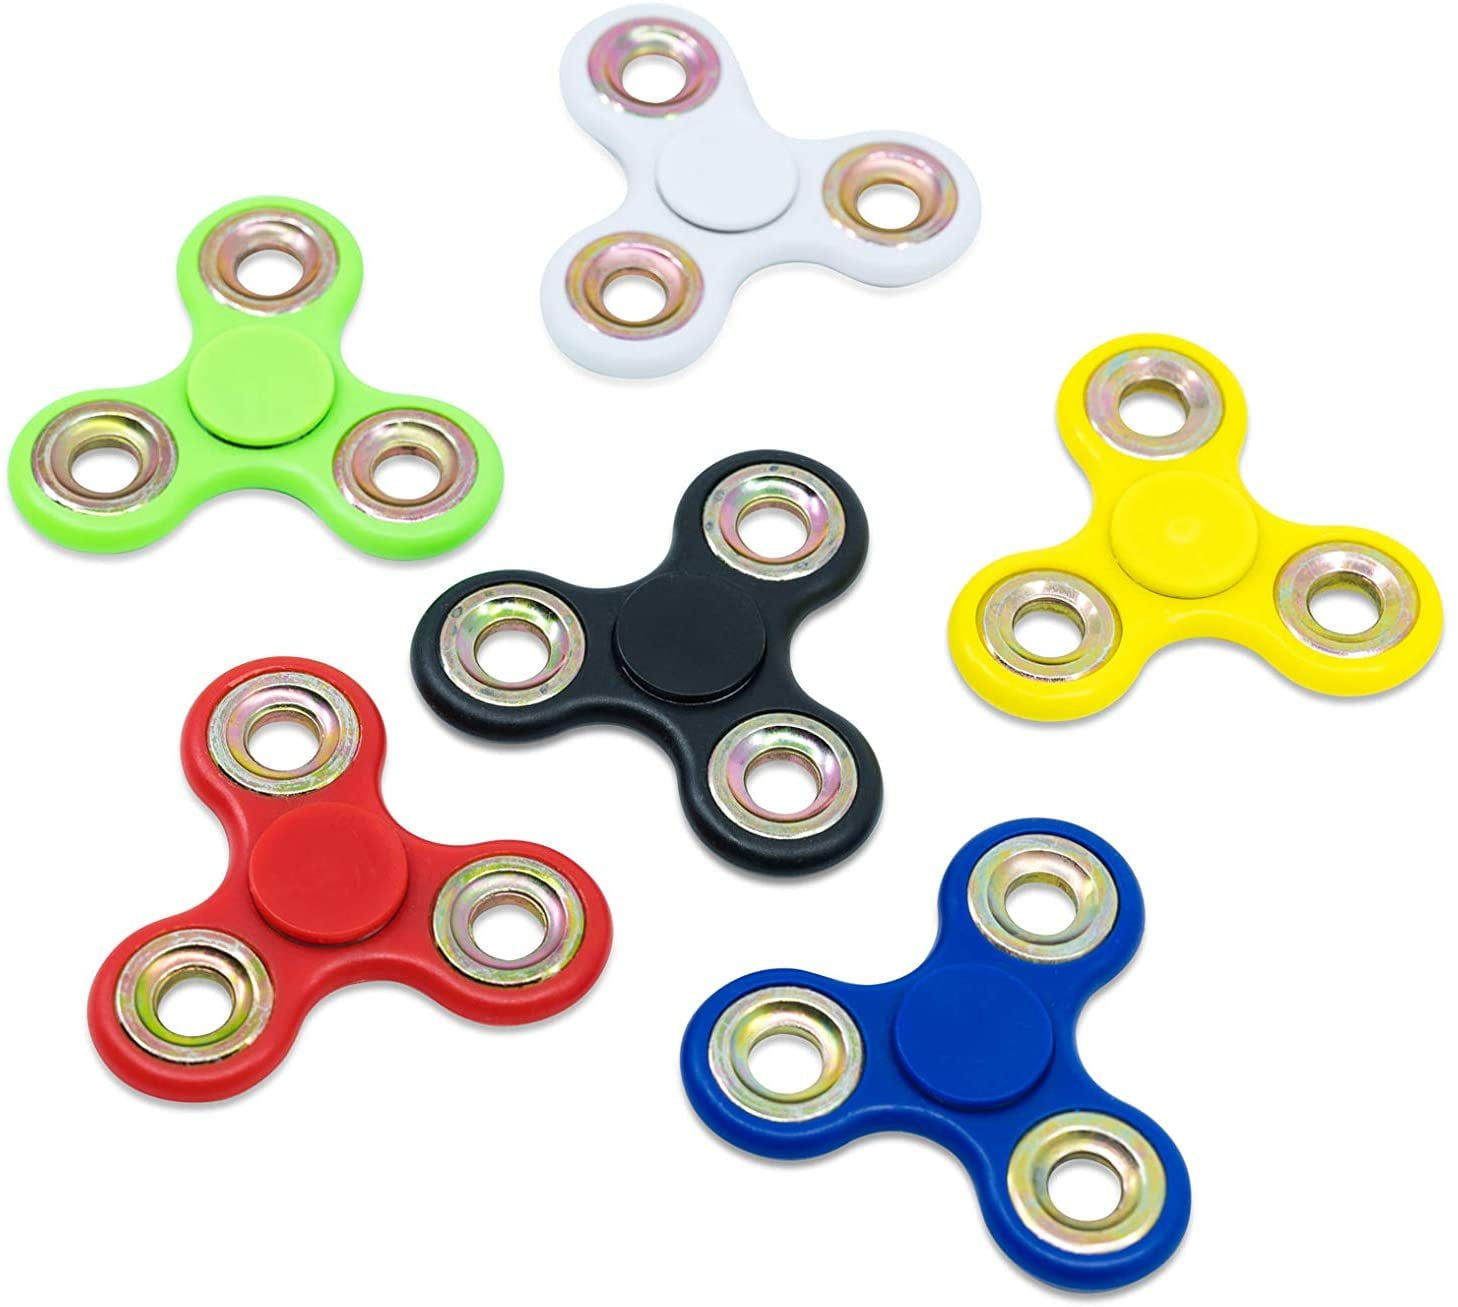 NEW! Lot Of 6 ZURU Fidget Spinners By Antsy Lab 